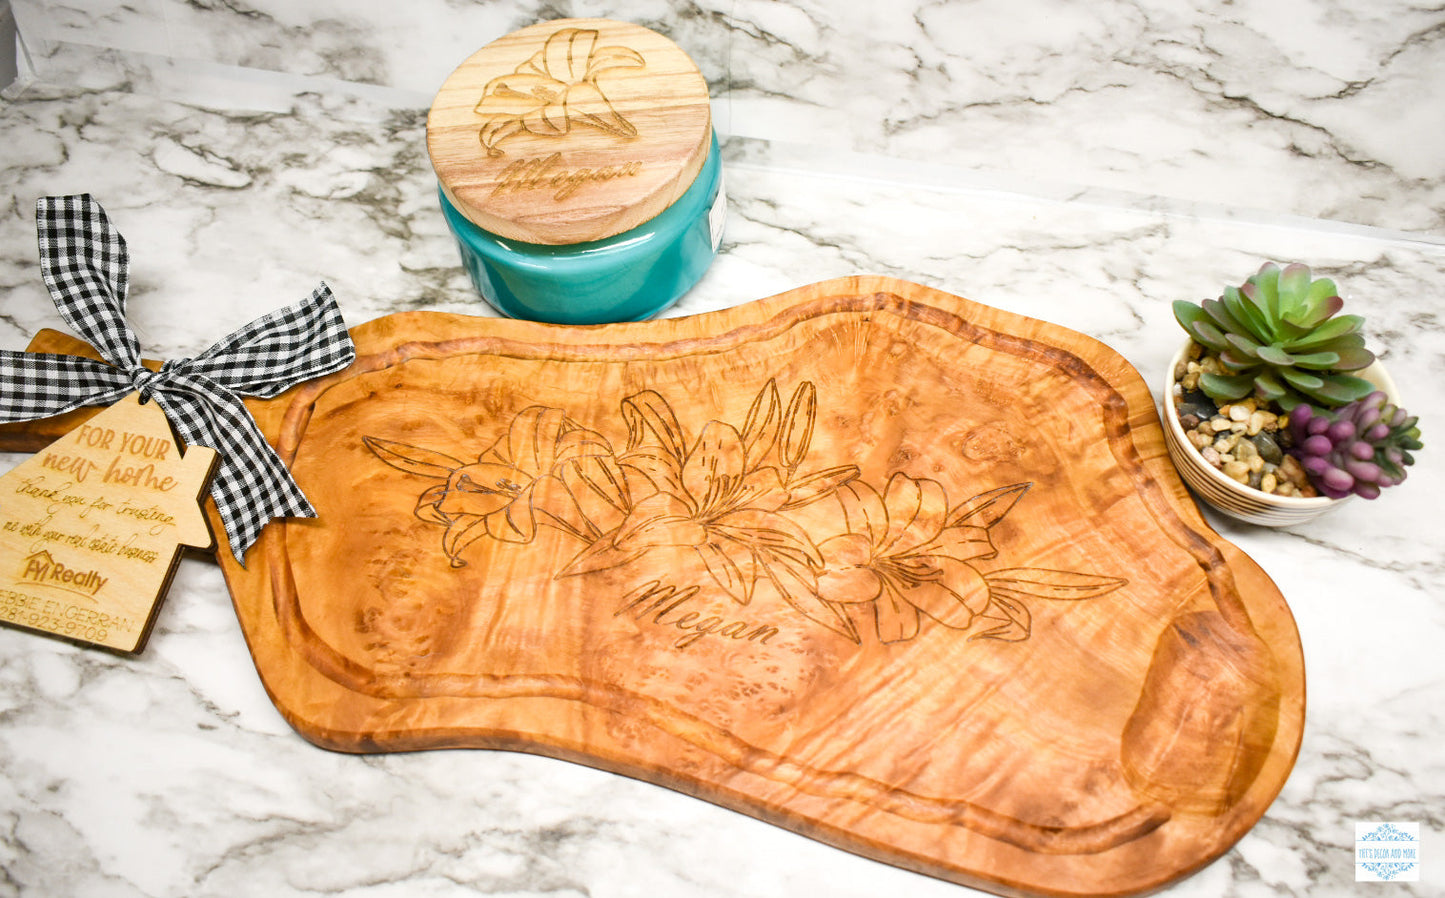 Rectangular Olive wood cutting charcuterie board 12 inch